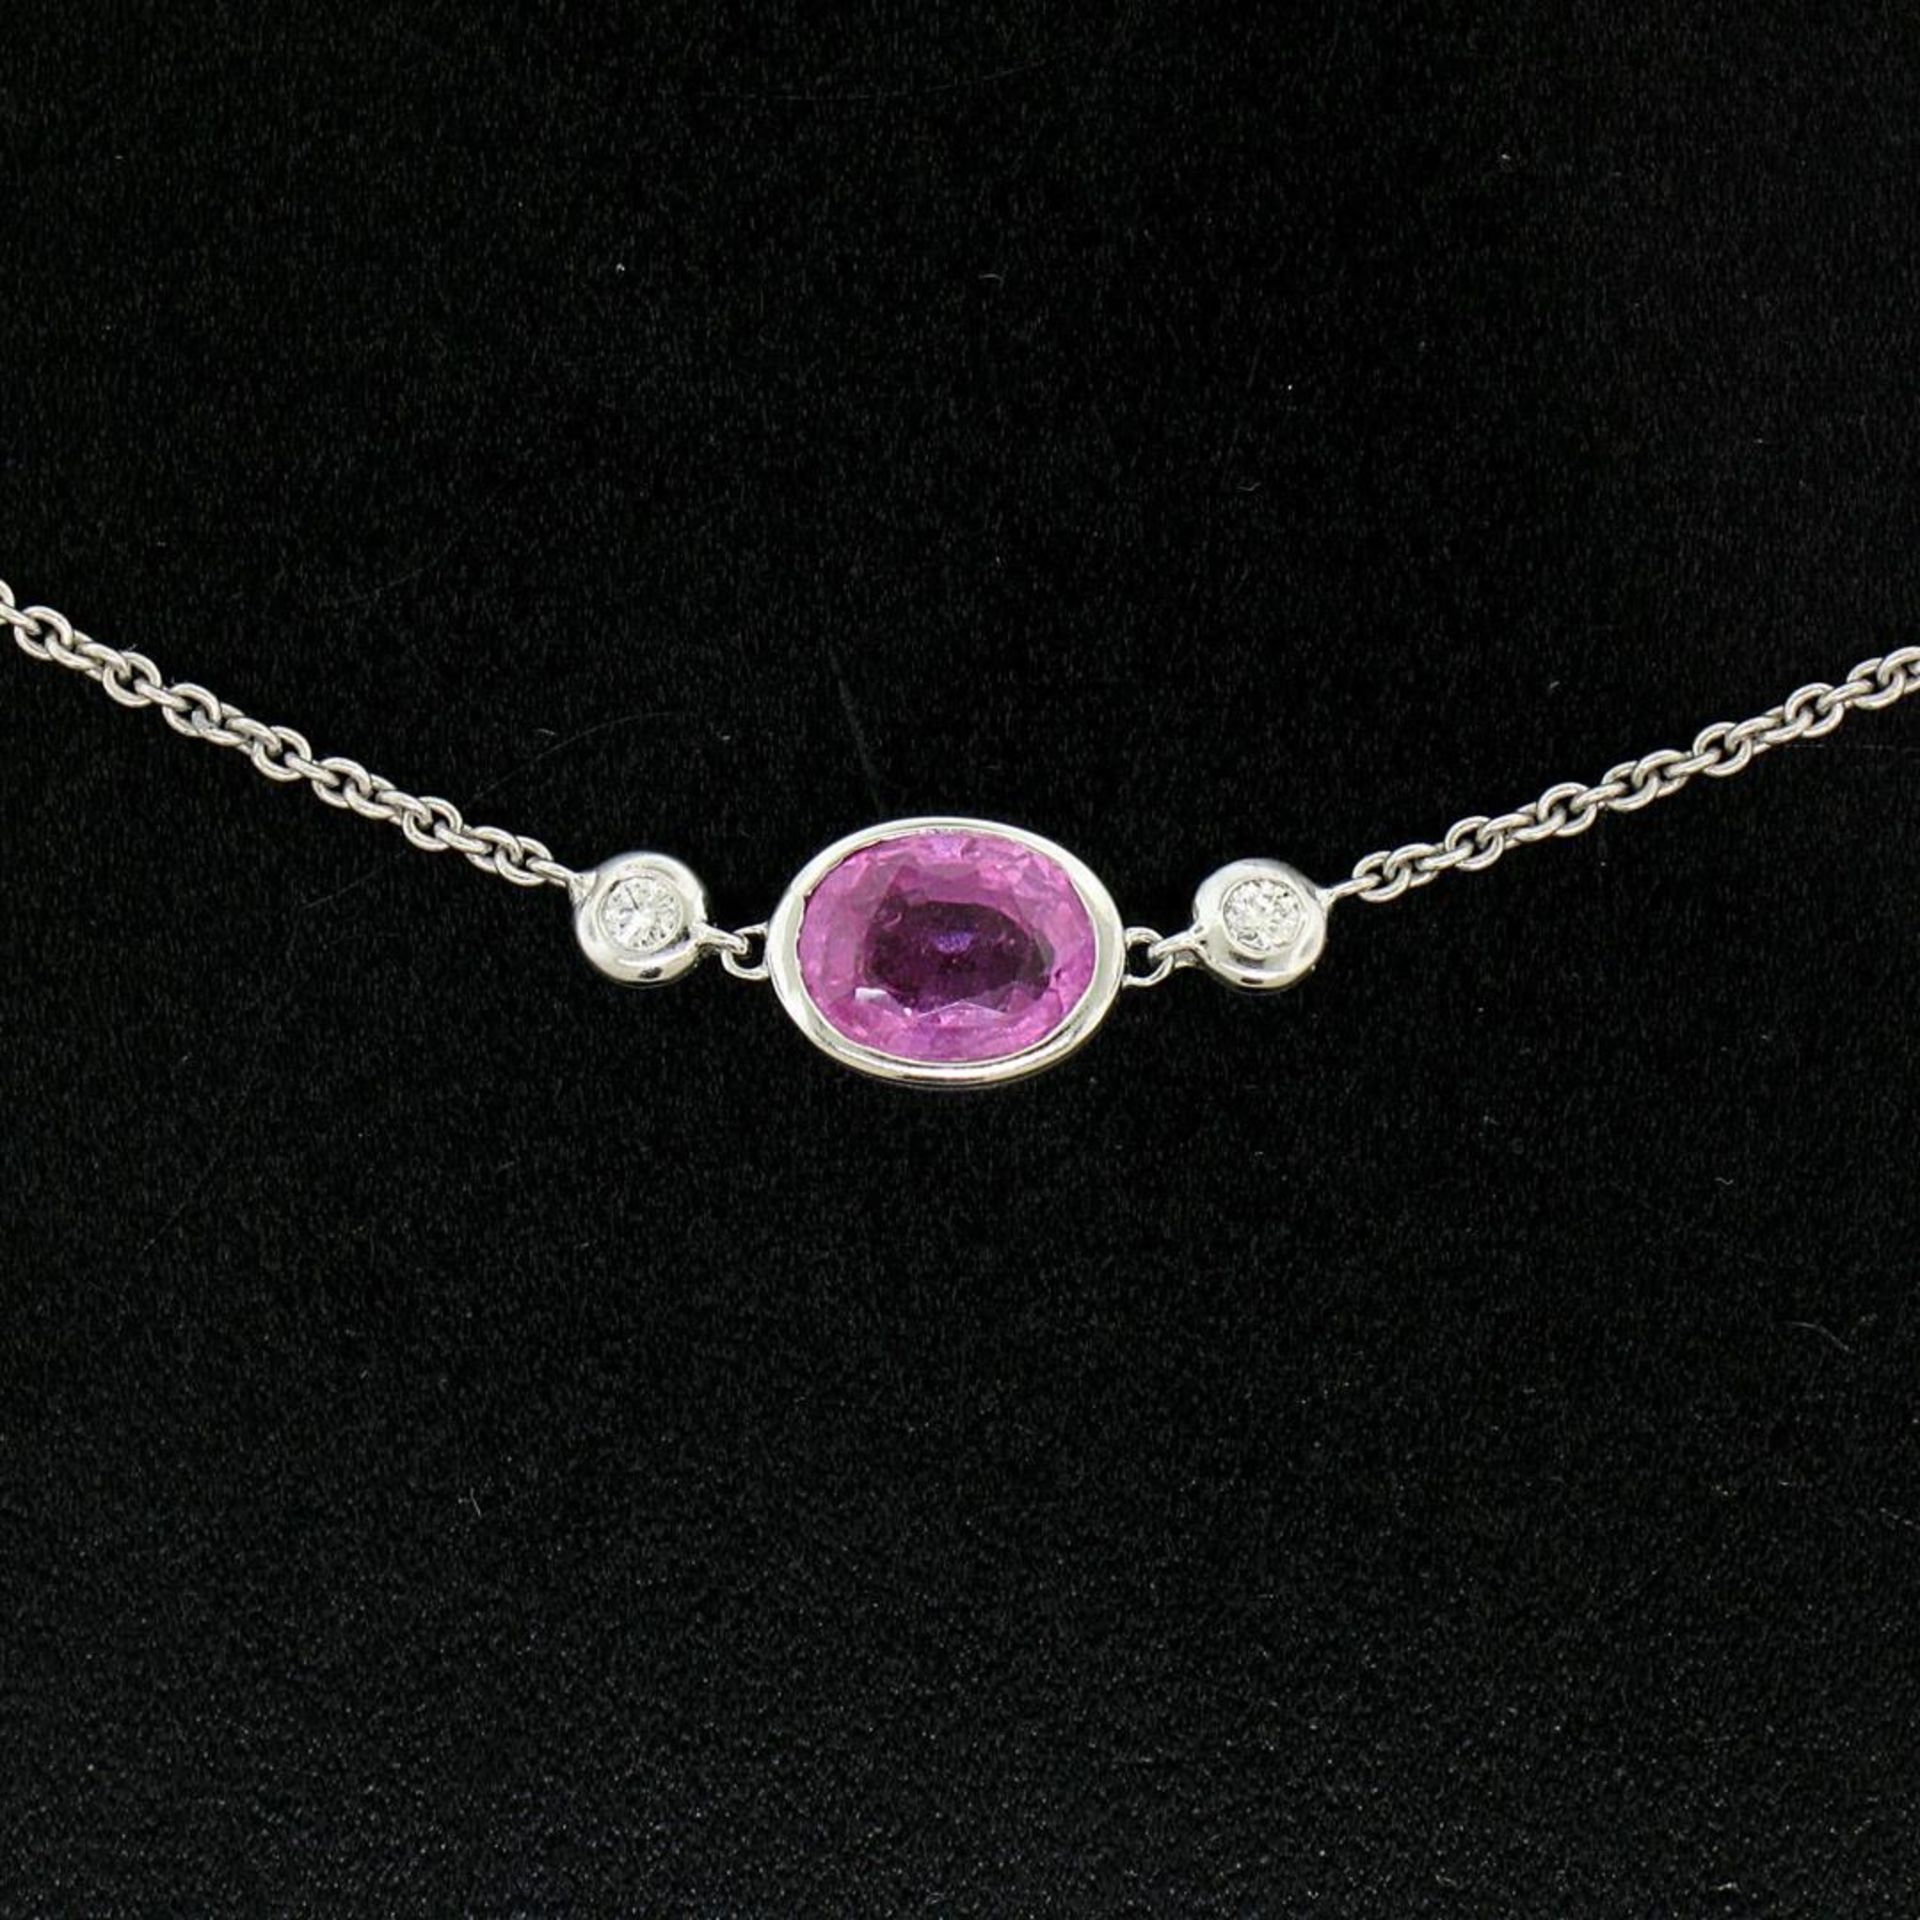 18K White Gold 16" 1.37 ctw GIA Pink Sapphire & Diamond Pendant Necklace - Image 4 of 9